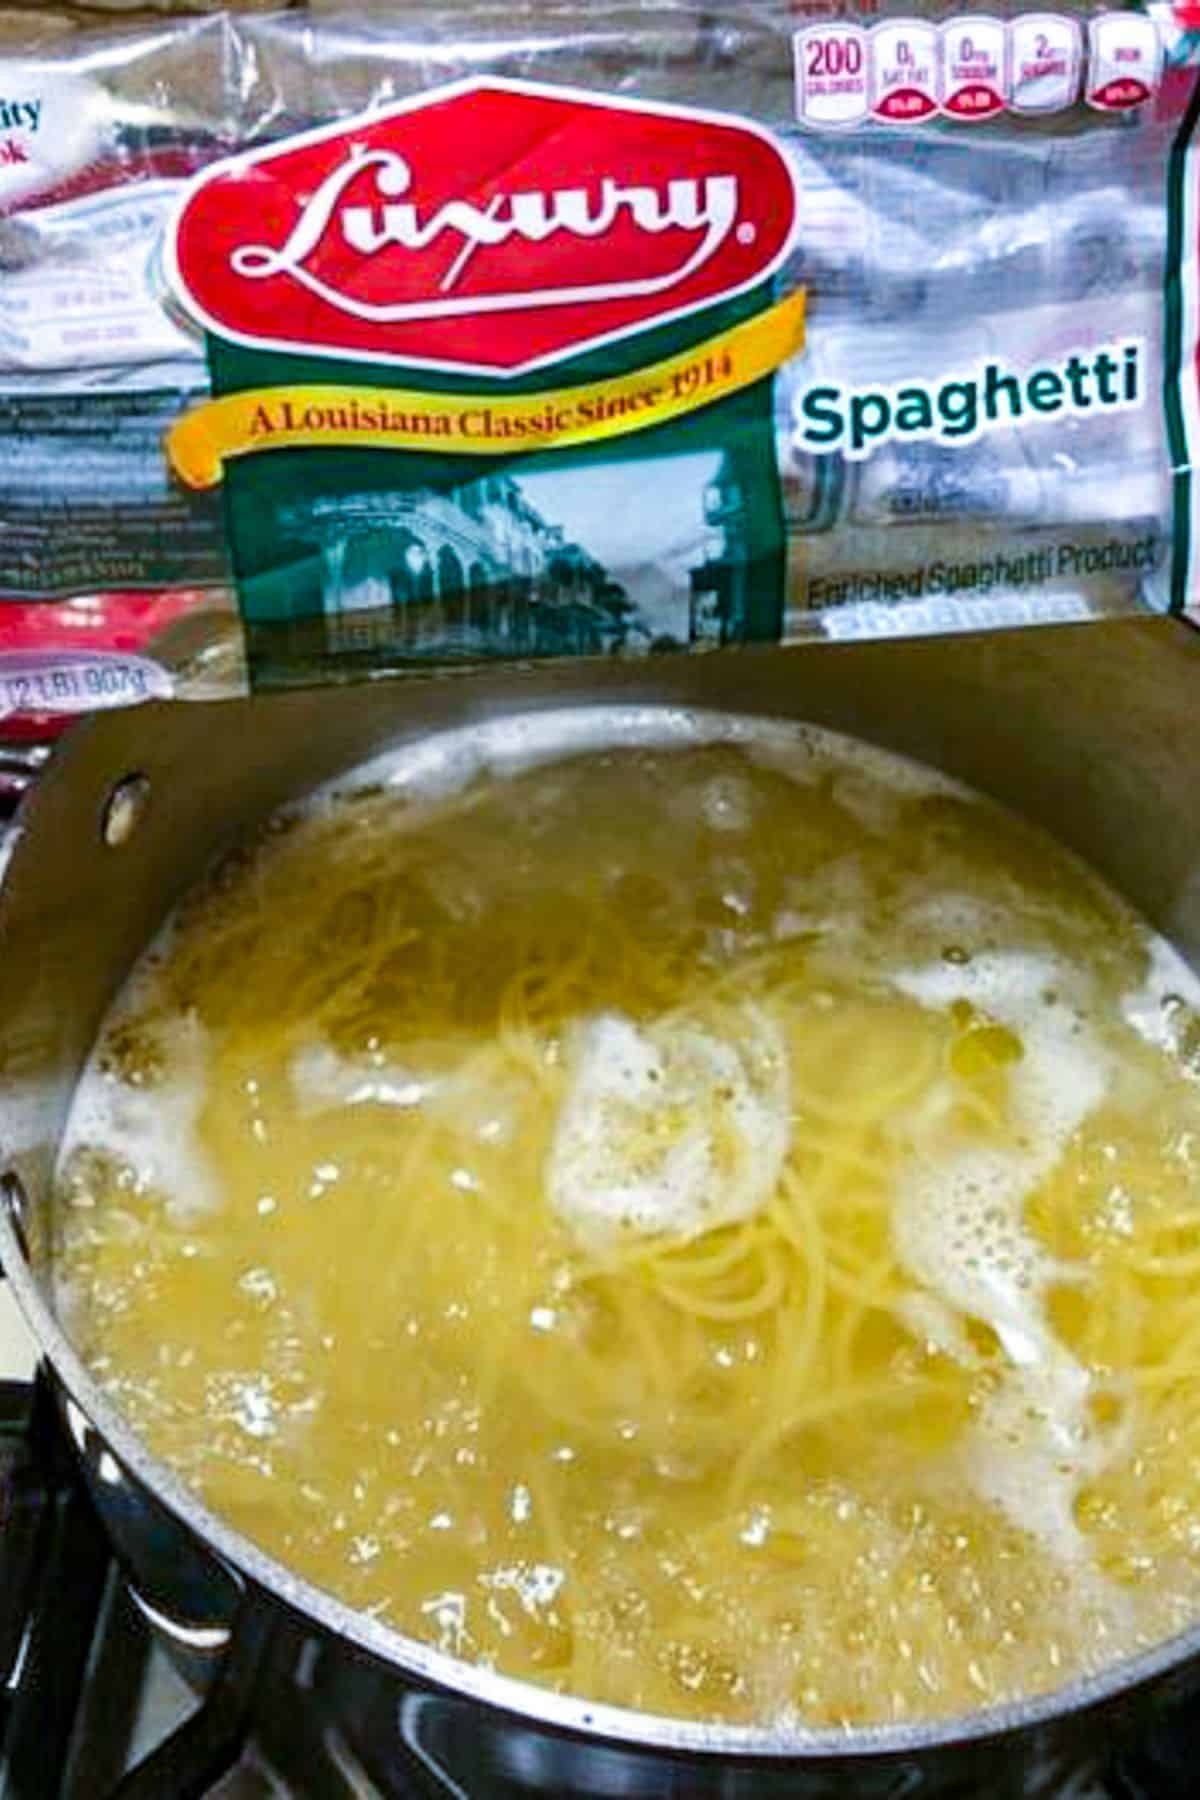 A bag of luxury spaghetti over a pot of cooked spaghetti.